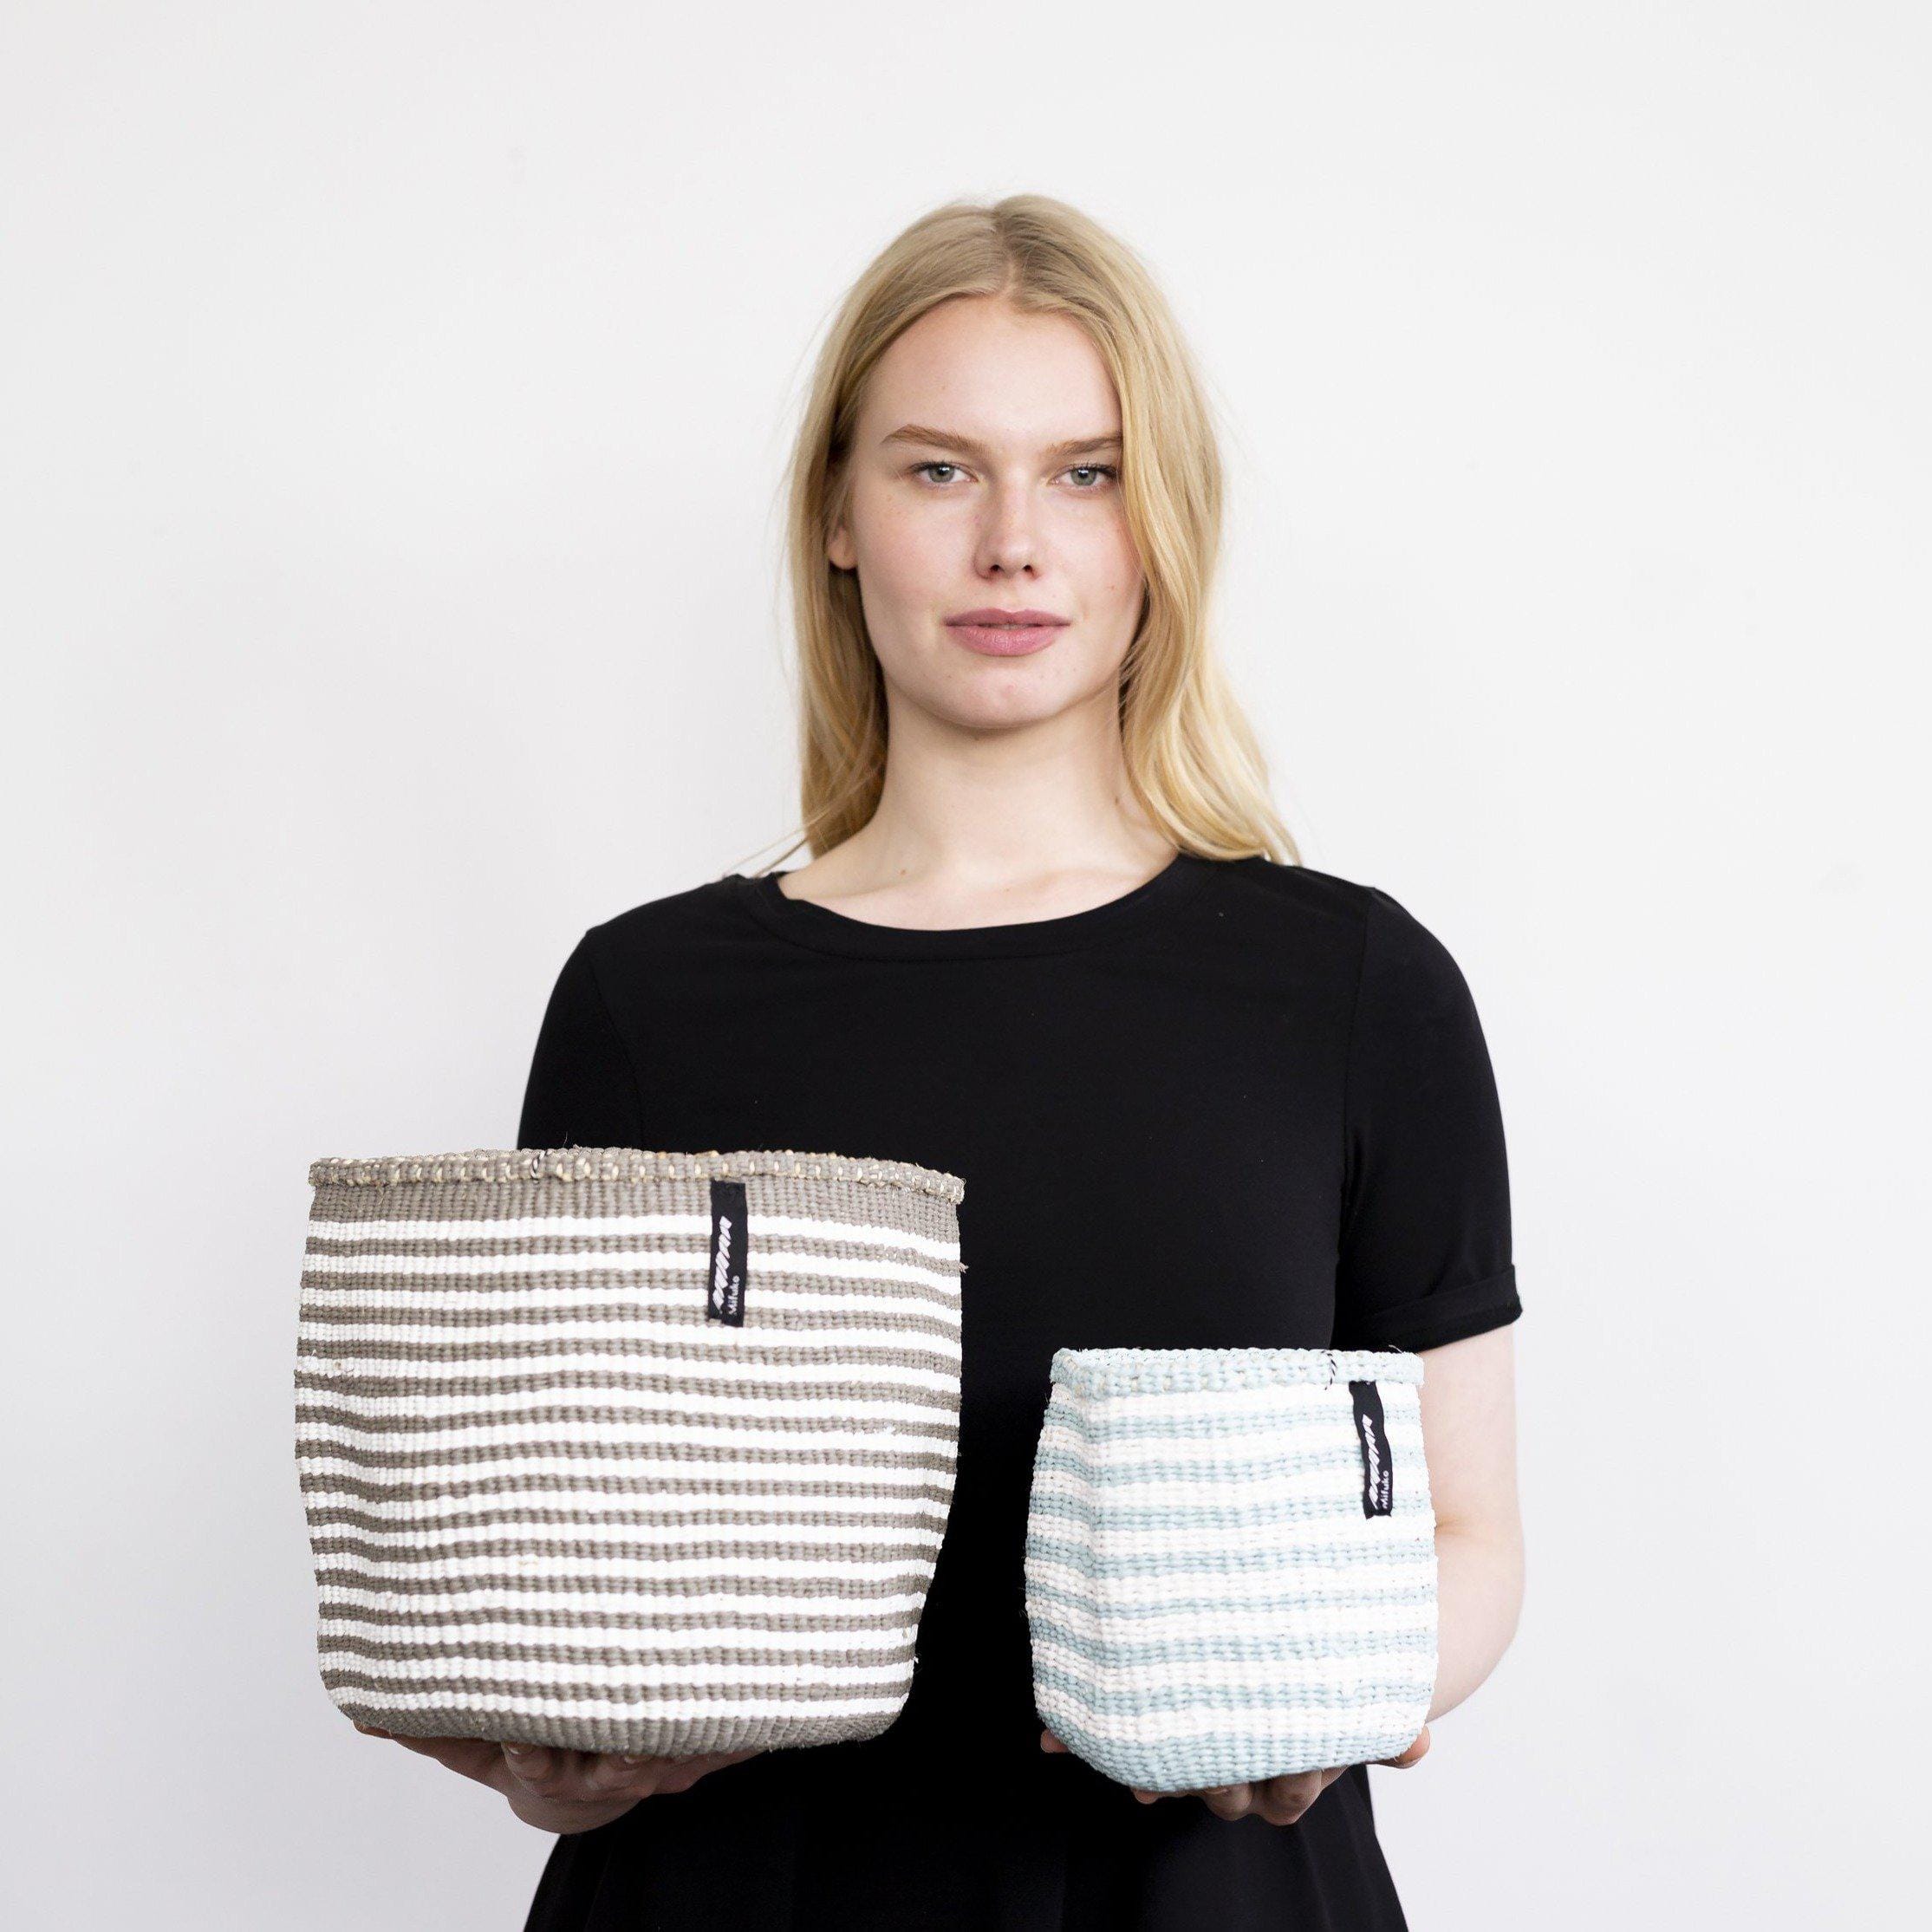 Mifuko Partly recycled plastic and sisal Small basket S Kiondo basket | Thin warm grey stripes S